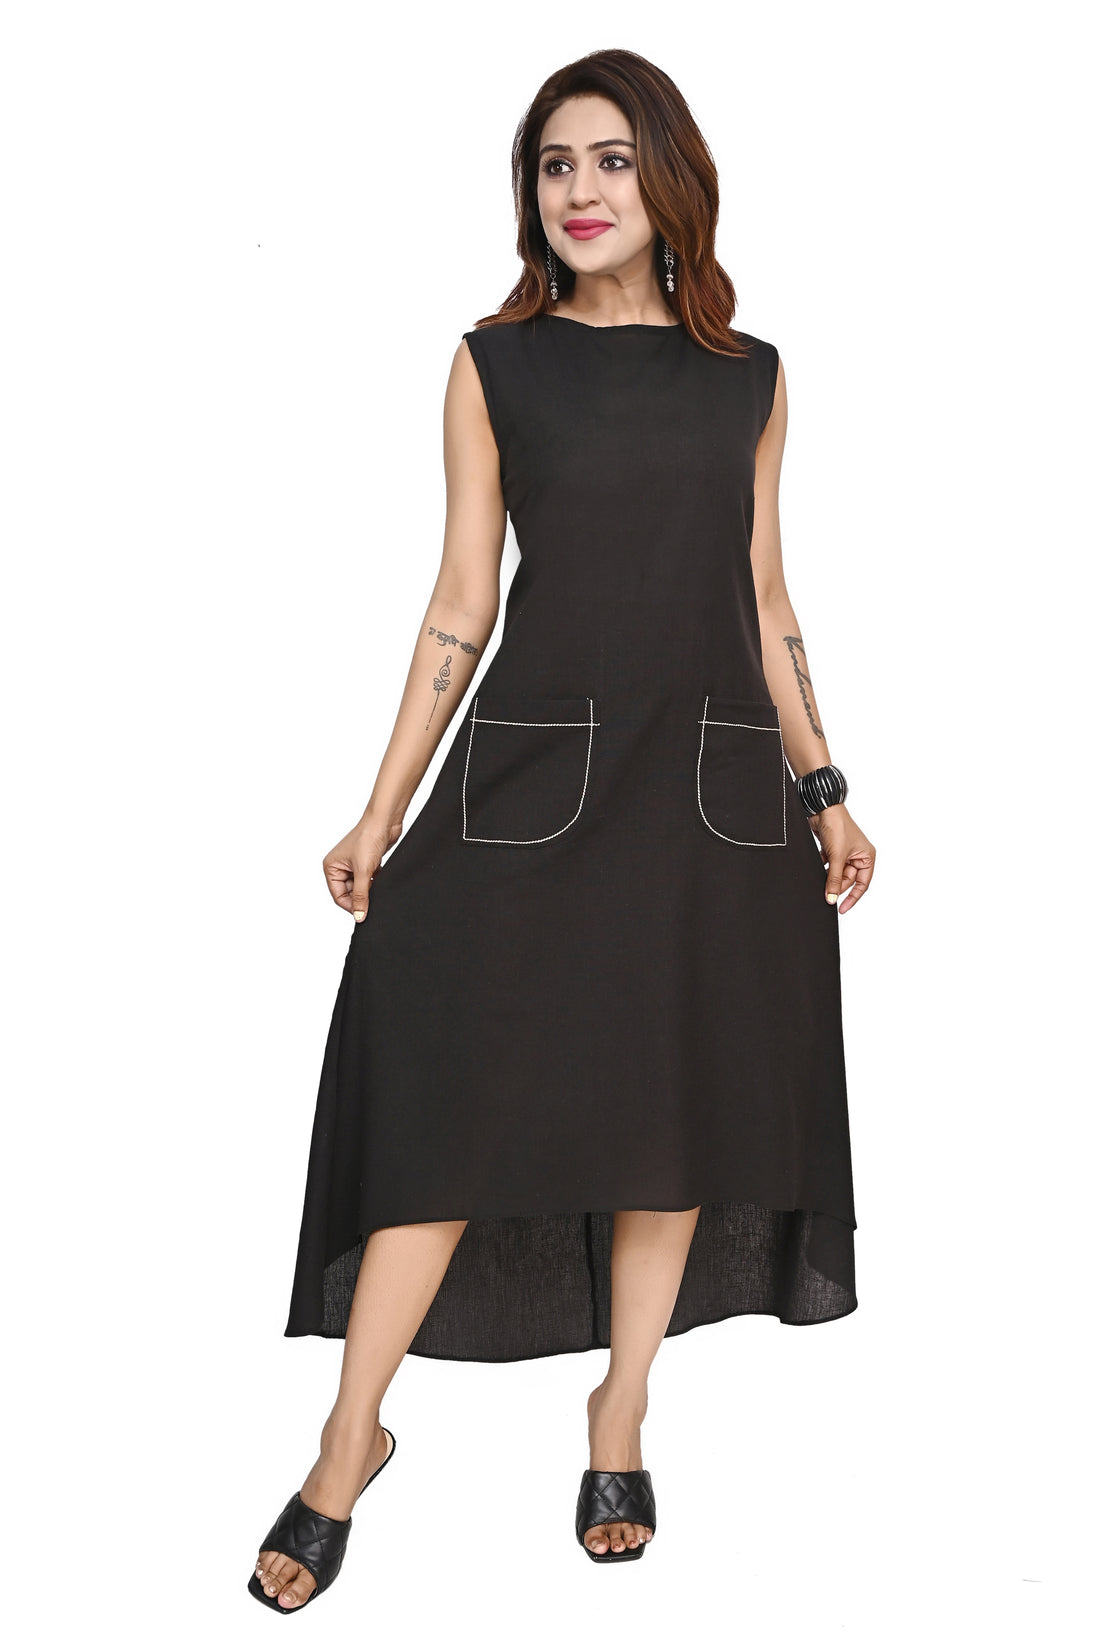 Nirmal online Premium Cotton Tunic Dress for Women in Black Colour